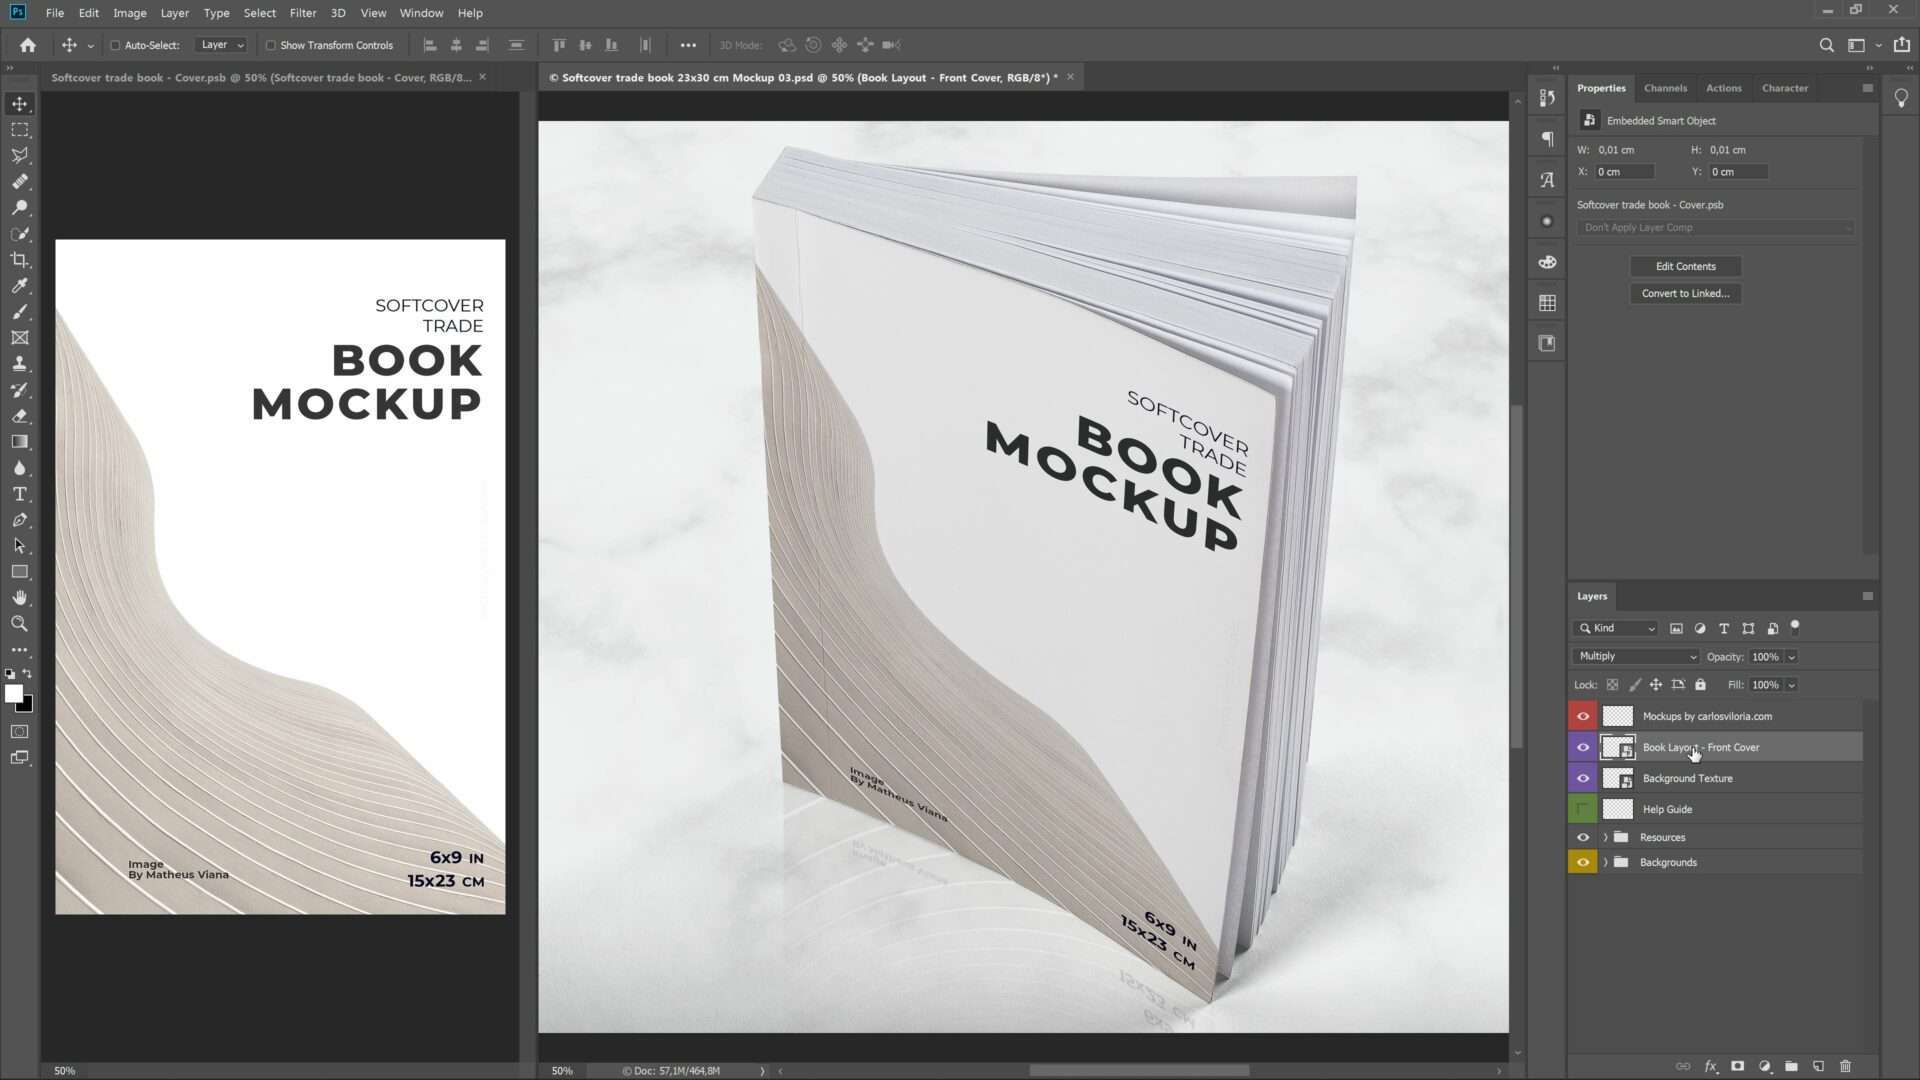 Softcover Trade Book Mockup 03 – 23x30cm